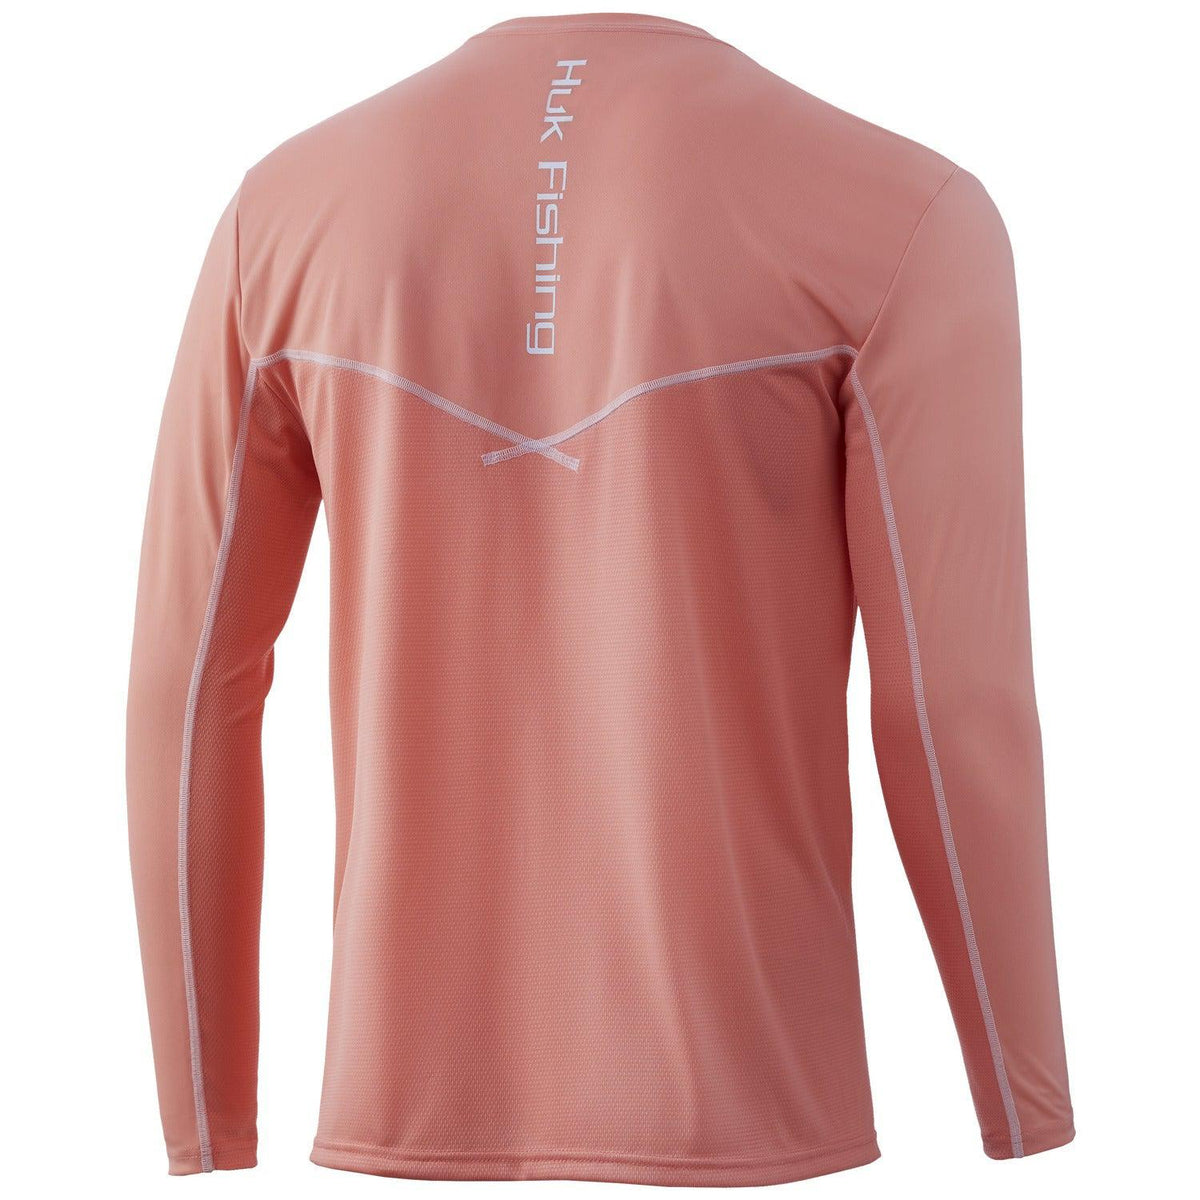 Men's Huk Icon x Solid Long Sleeve Shirt | Performance Fishing Shirts | Overcast Grey / XXL